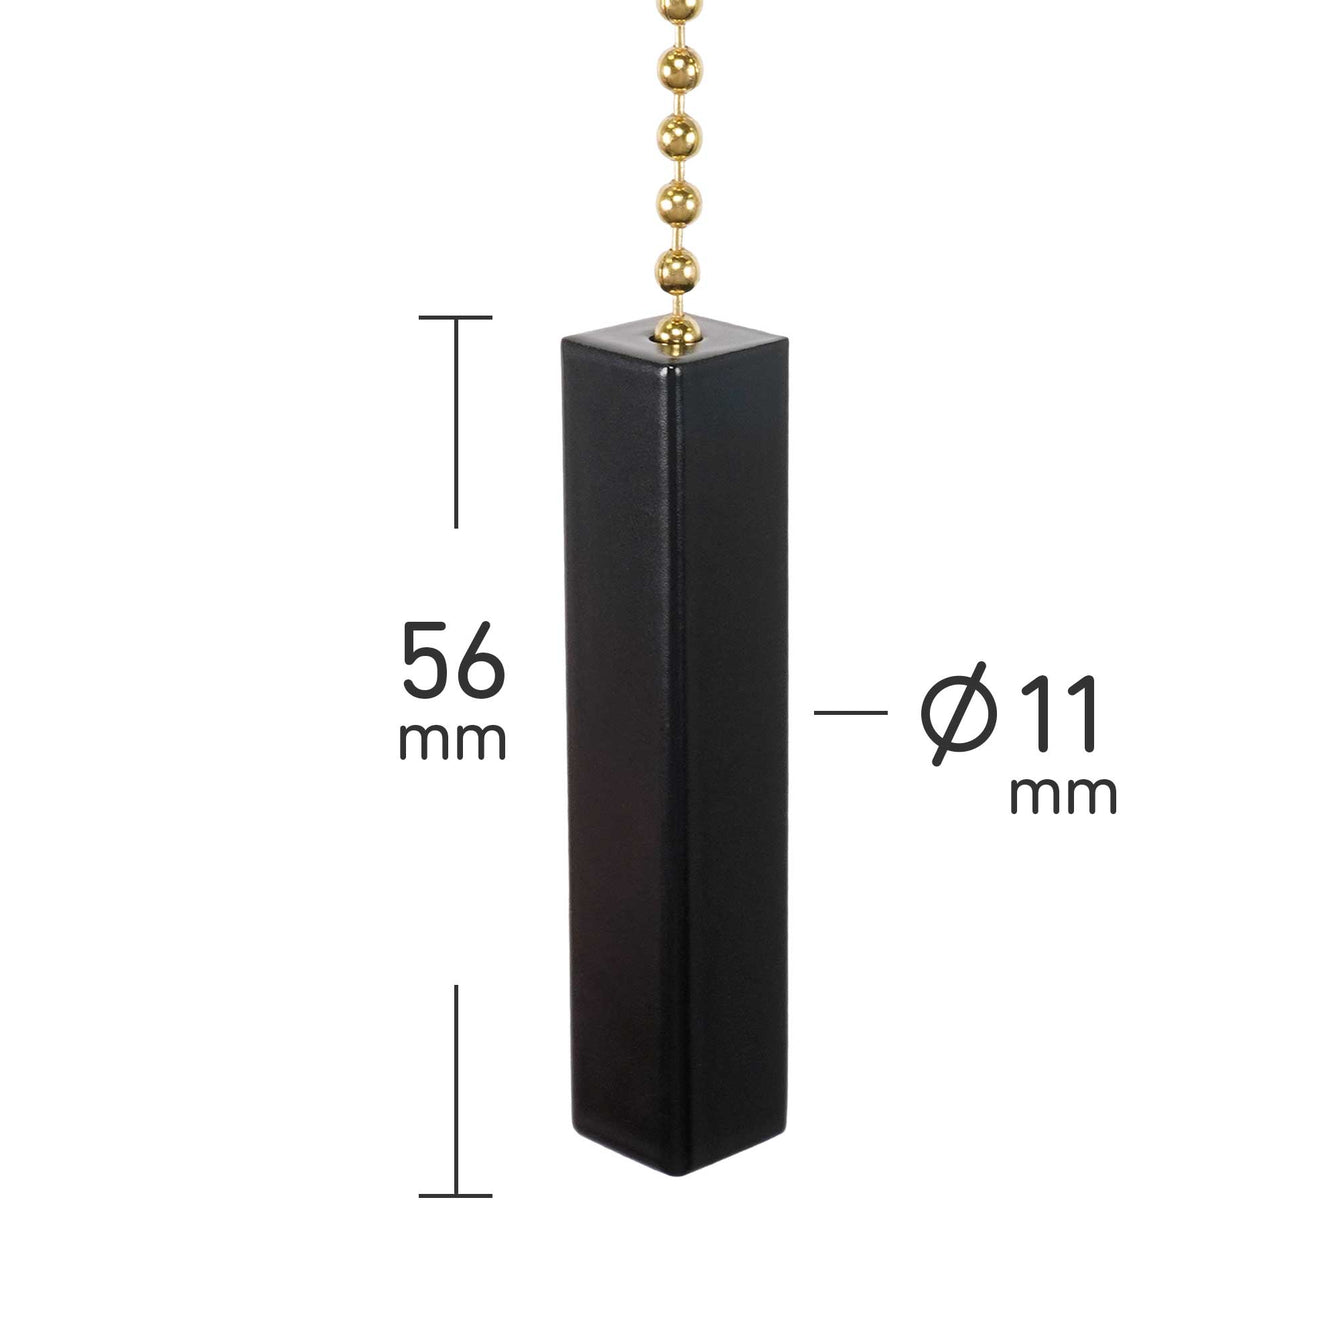 ElekTek Premium Brass Bathroom Light Pull Cord Switch Kit with Pull Chain Handle Black Cylinder / Black